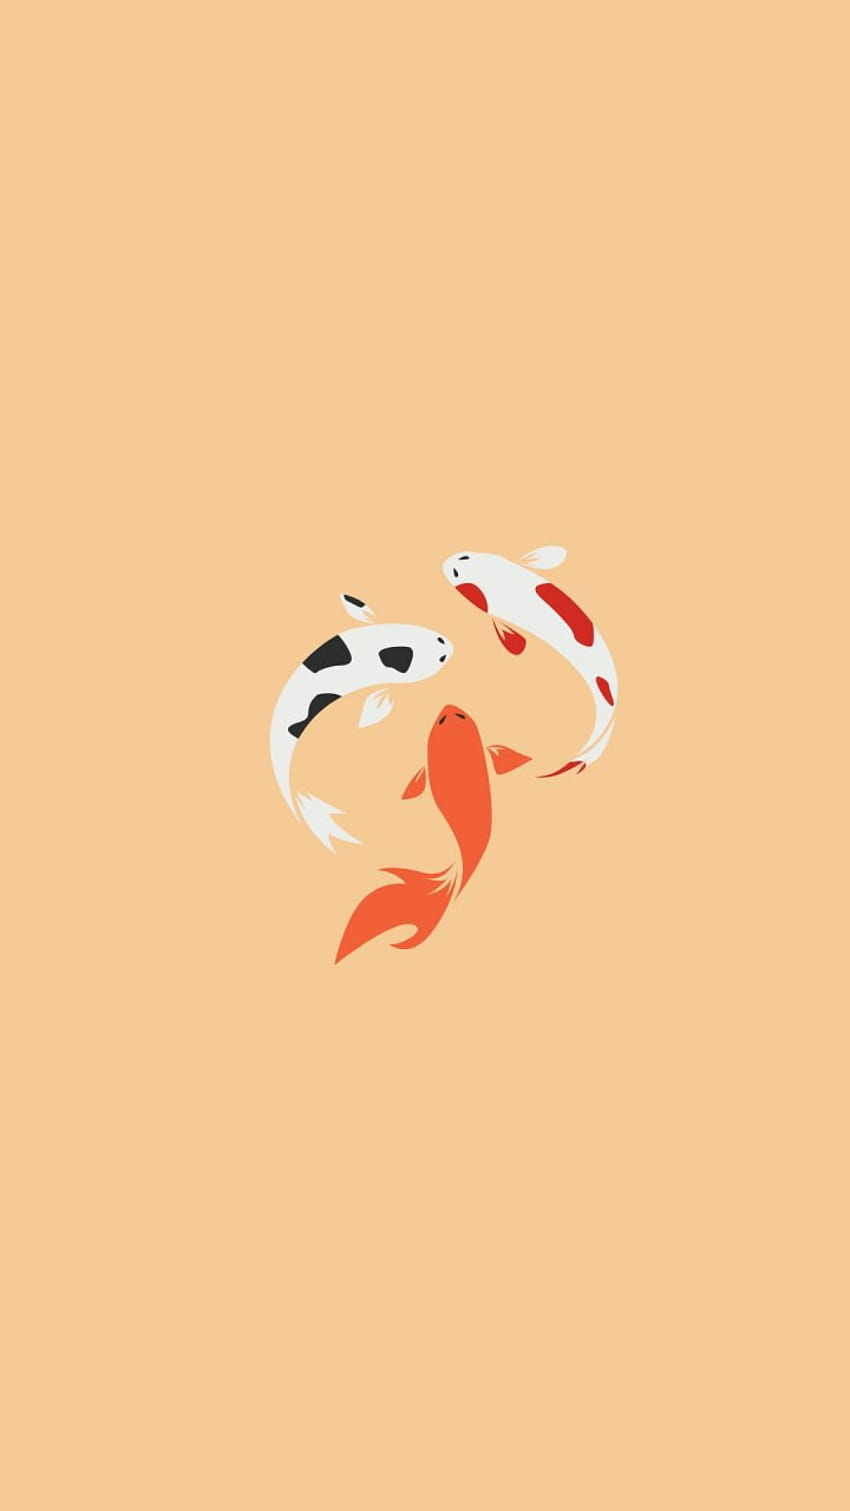 A koi fish swims in the water - Koi fish, fish